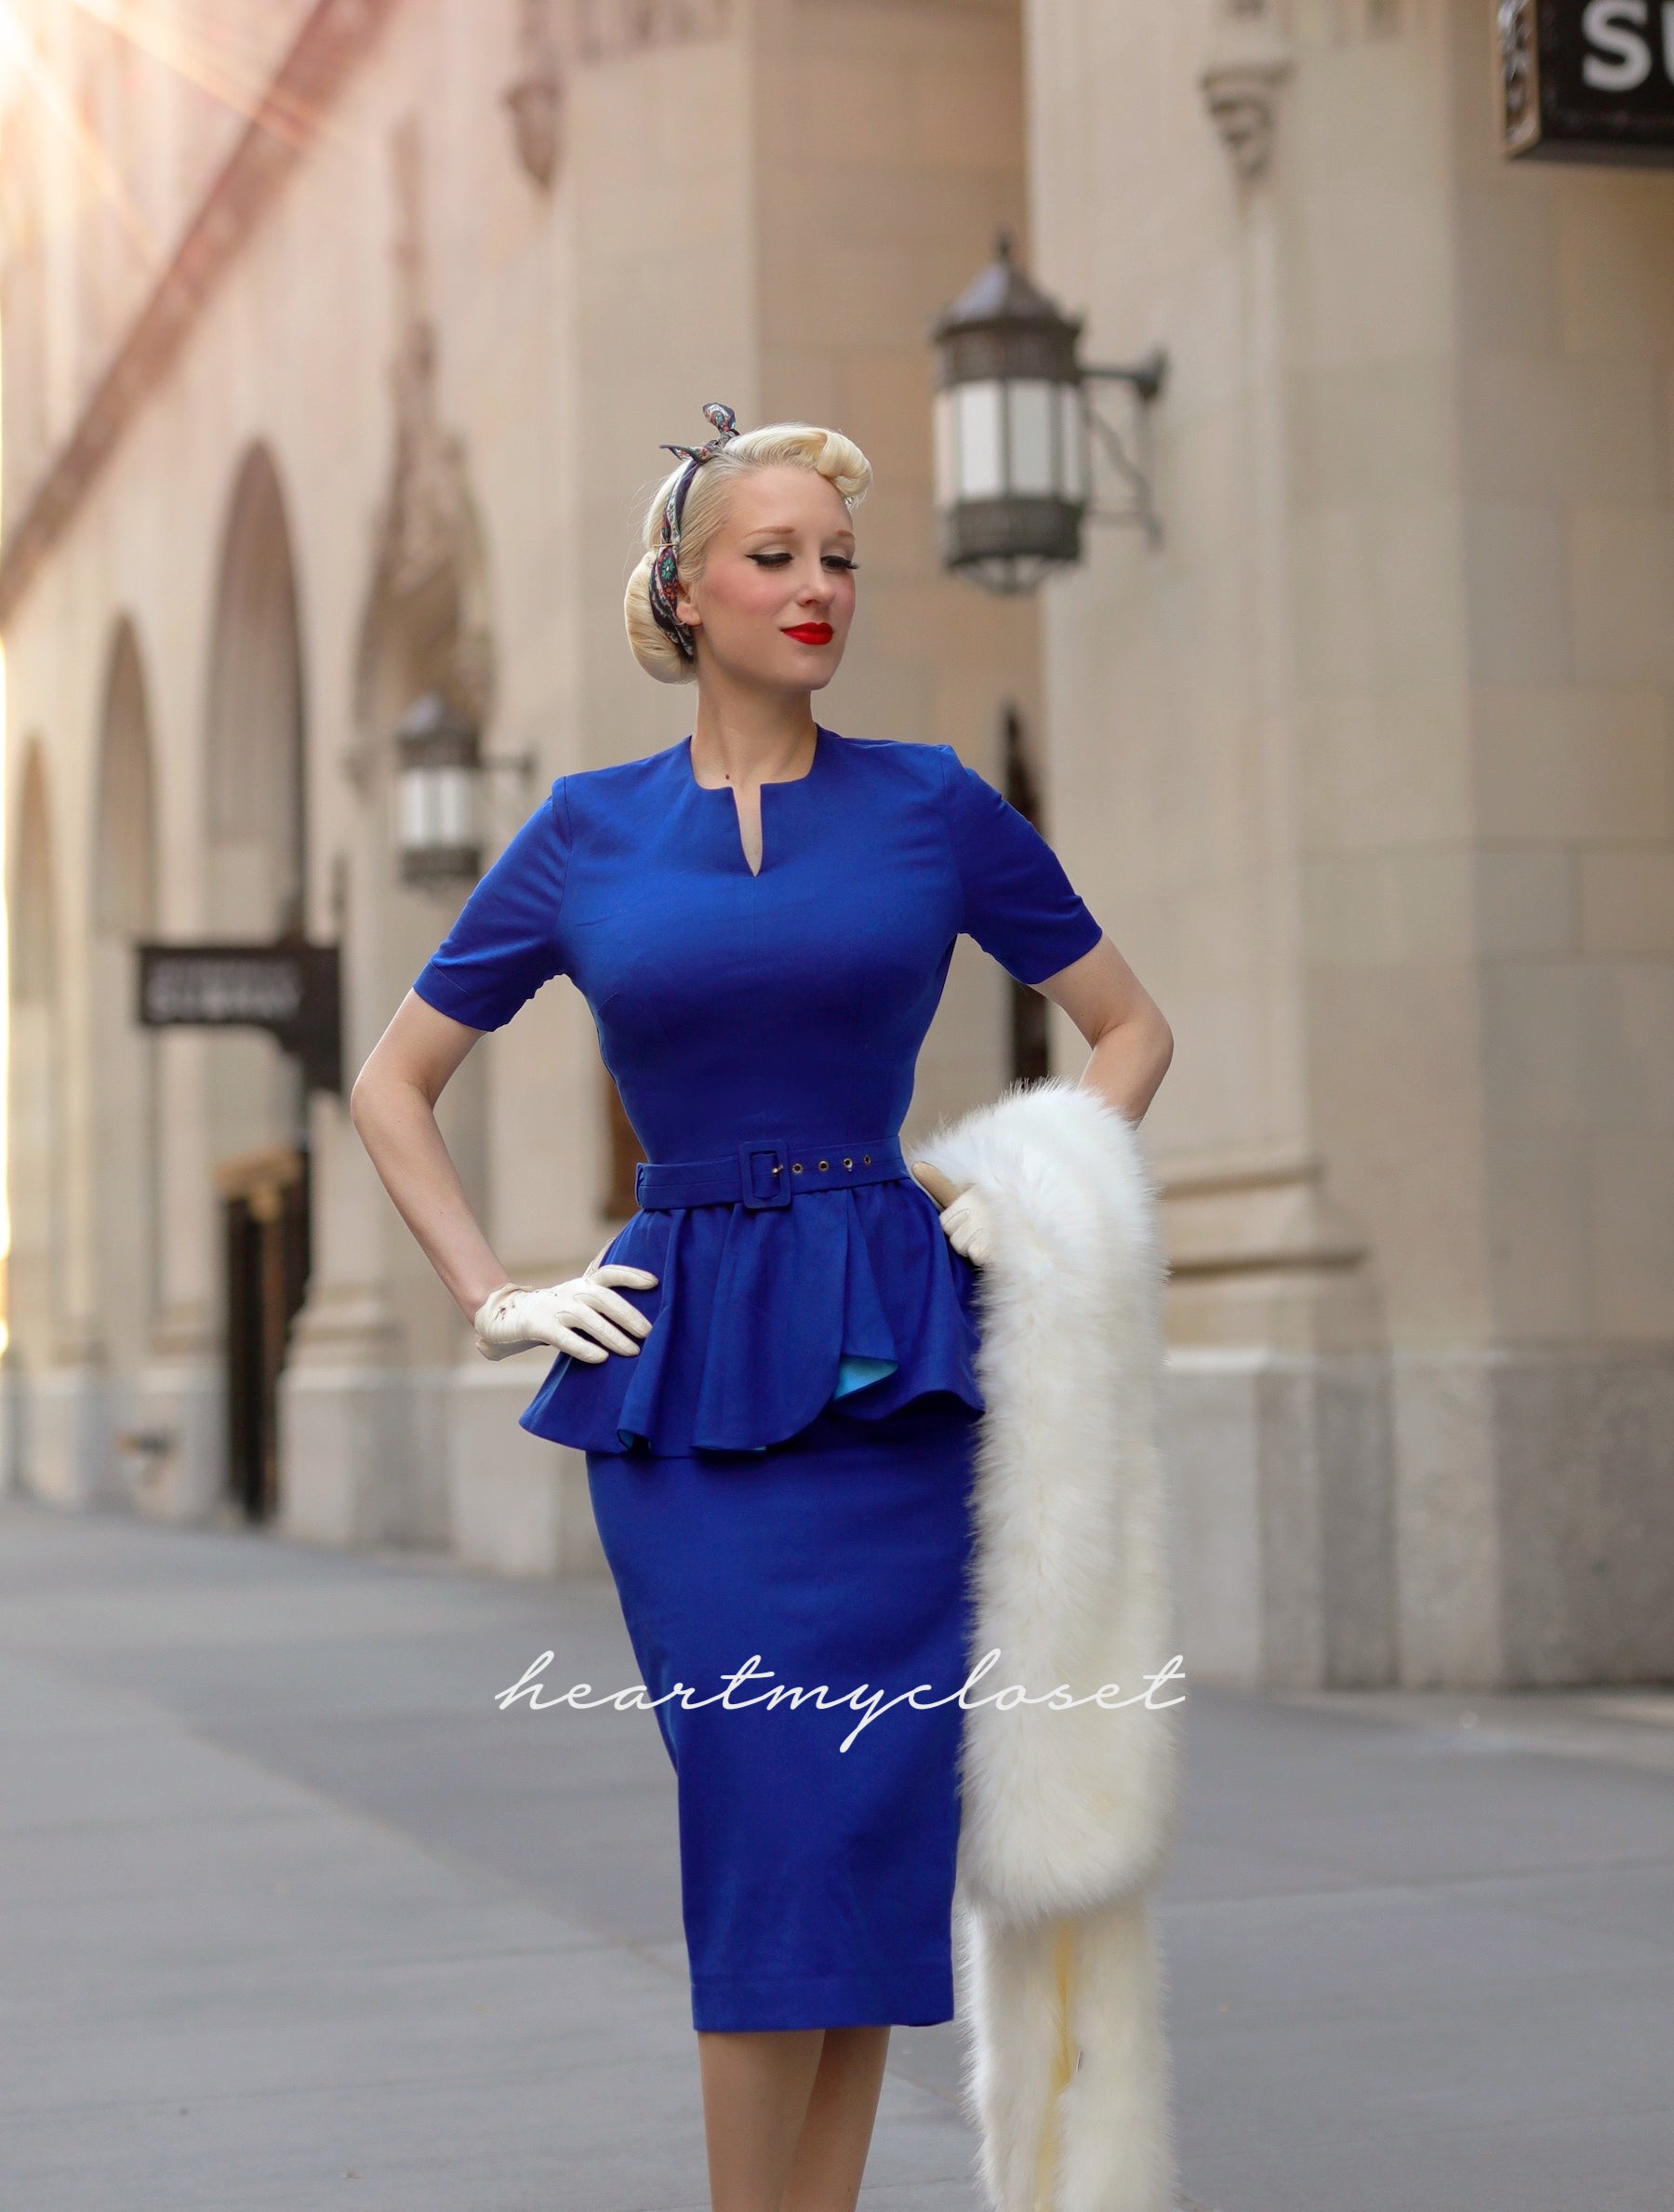 1940s dress